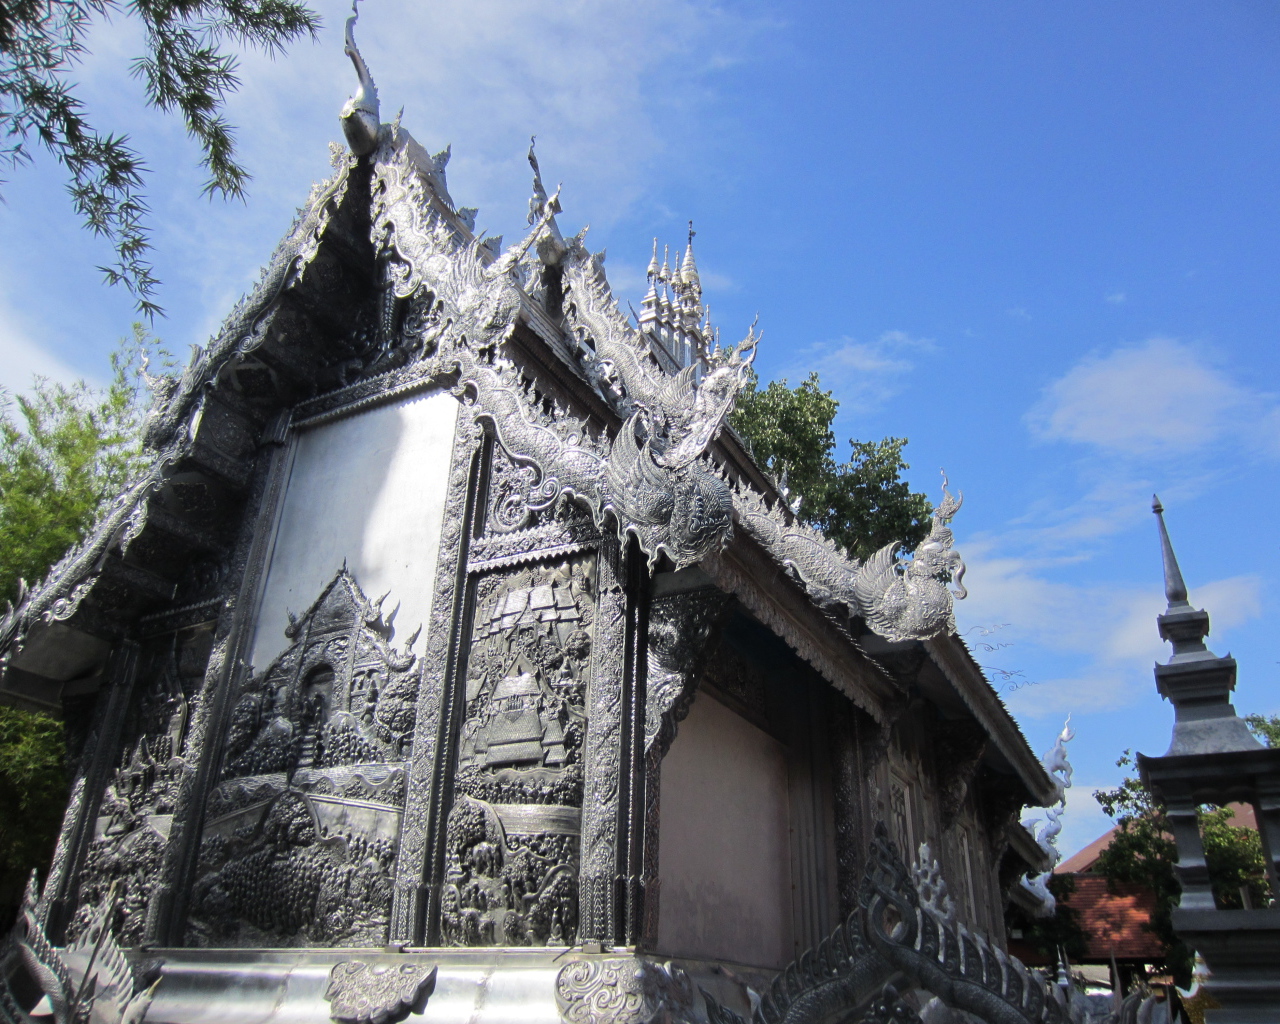 Серебряный храм на курорте Чианг Рай, Таиланд